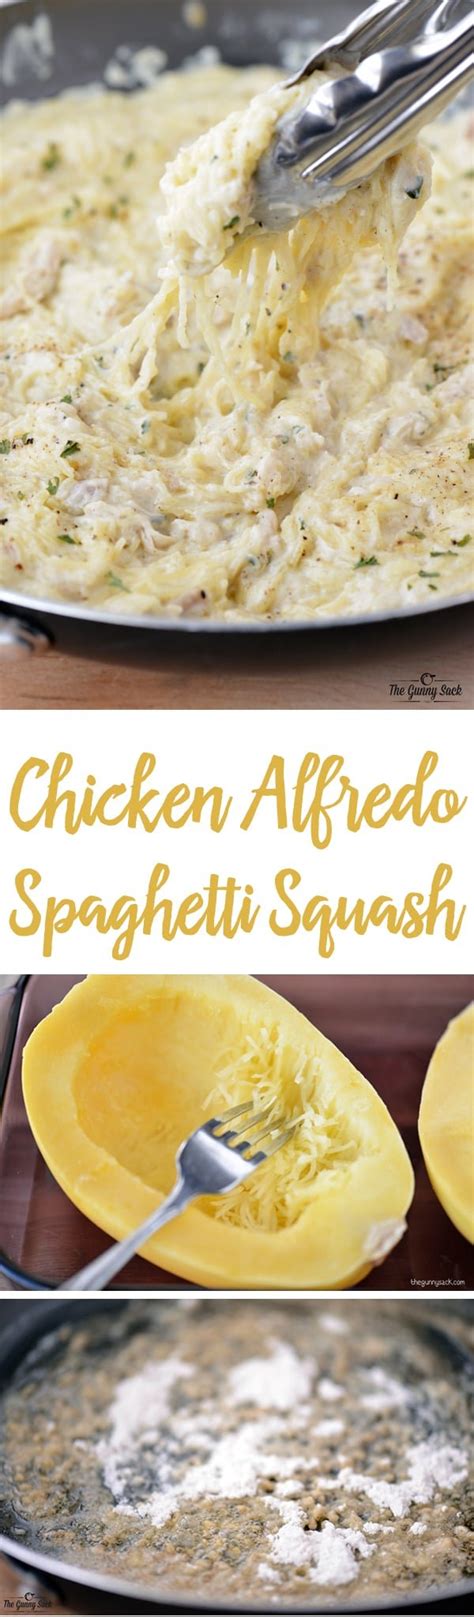 Chicken Alfredo Spaghetti Squash The Gunny Sack